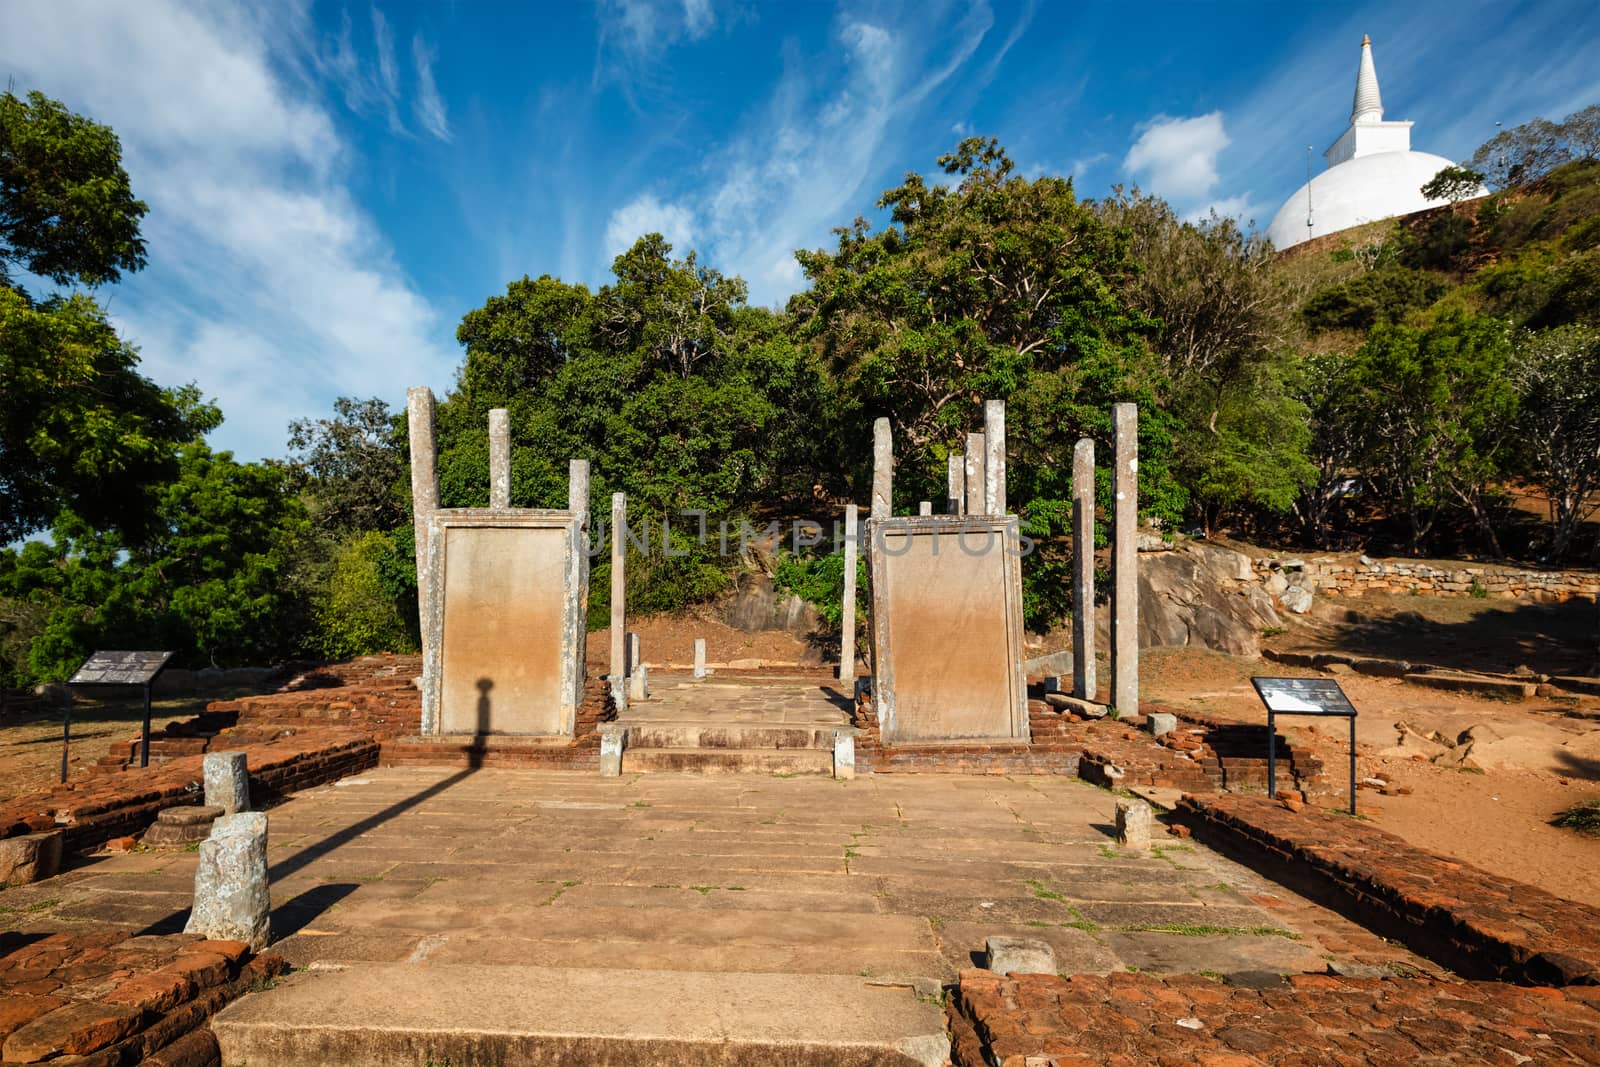 Relic house with Mihintale tablets, Mihintale, Sri Lanka. Ancient ruins pillars with inscriptions at Mahaseya Dagoba Buddhist monastery.